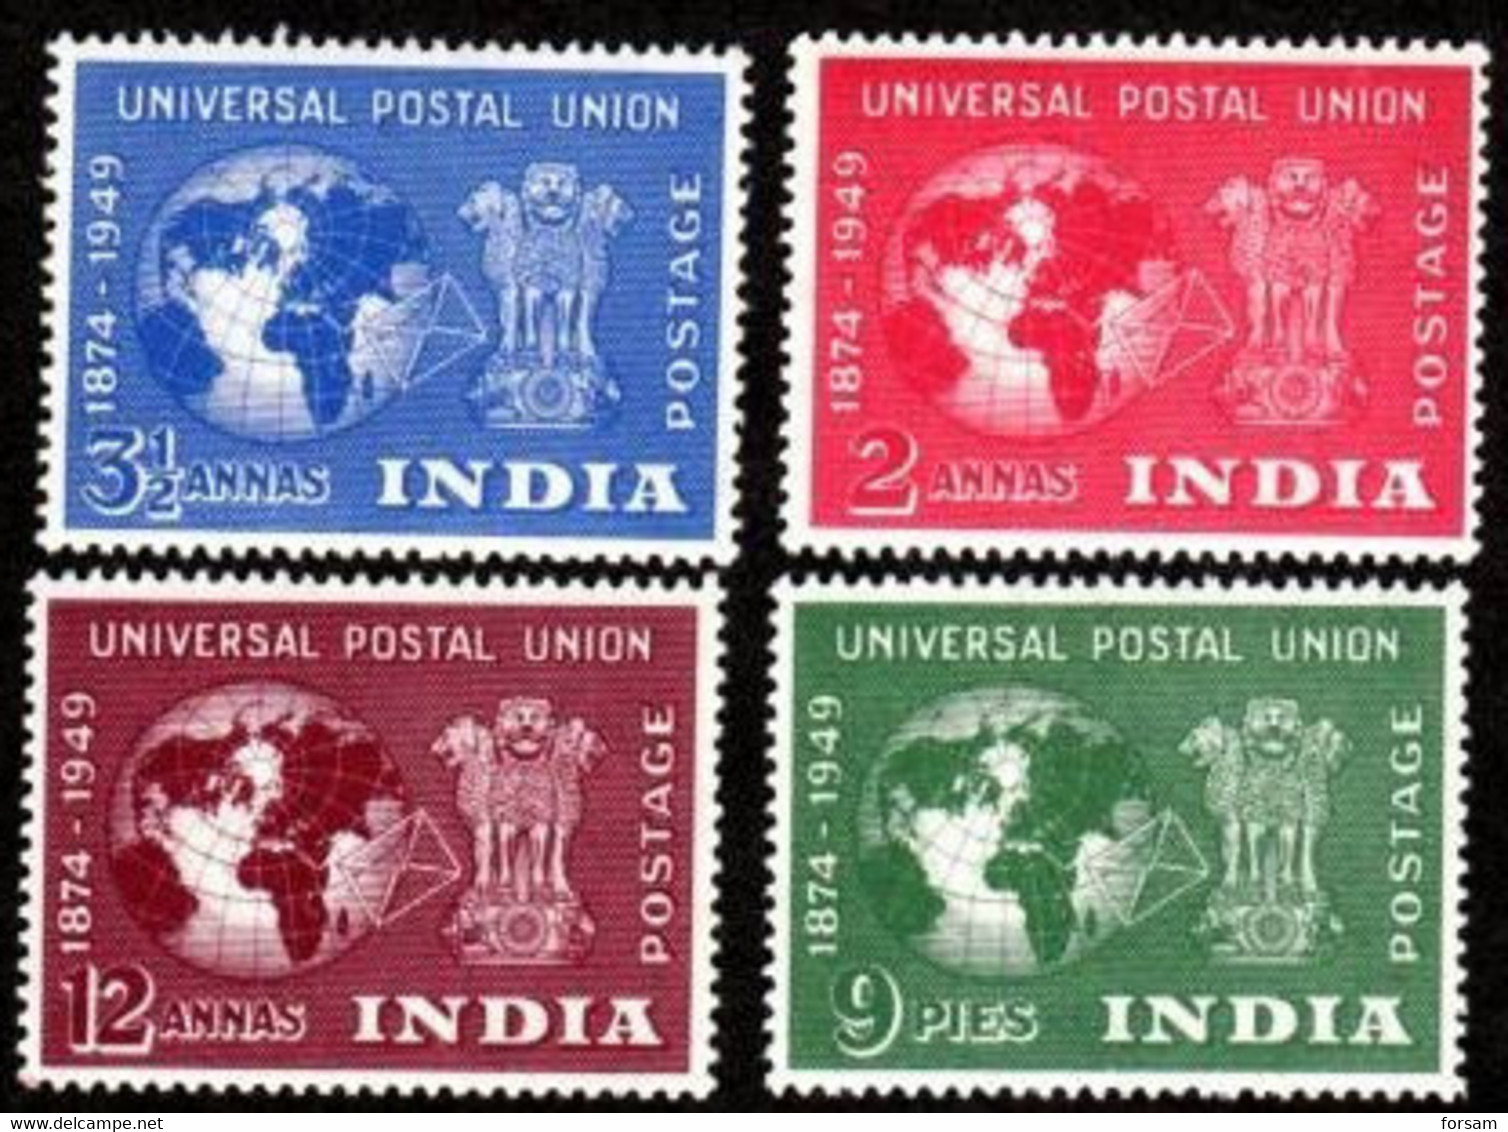 INDIA..1949..Michel # 207-210...MLH...MiCV - 40 Euro. - Unused Stamps